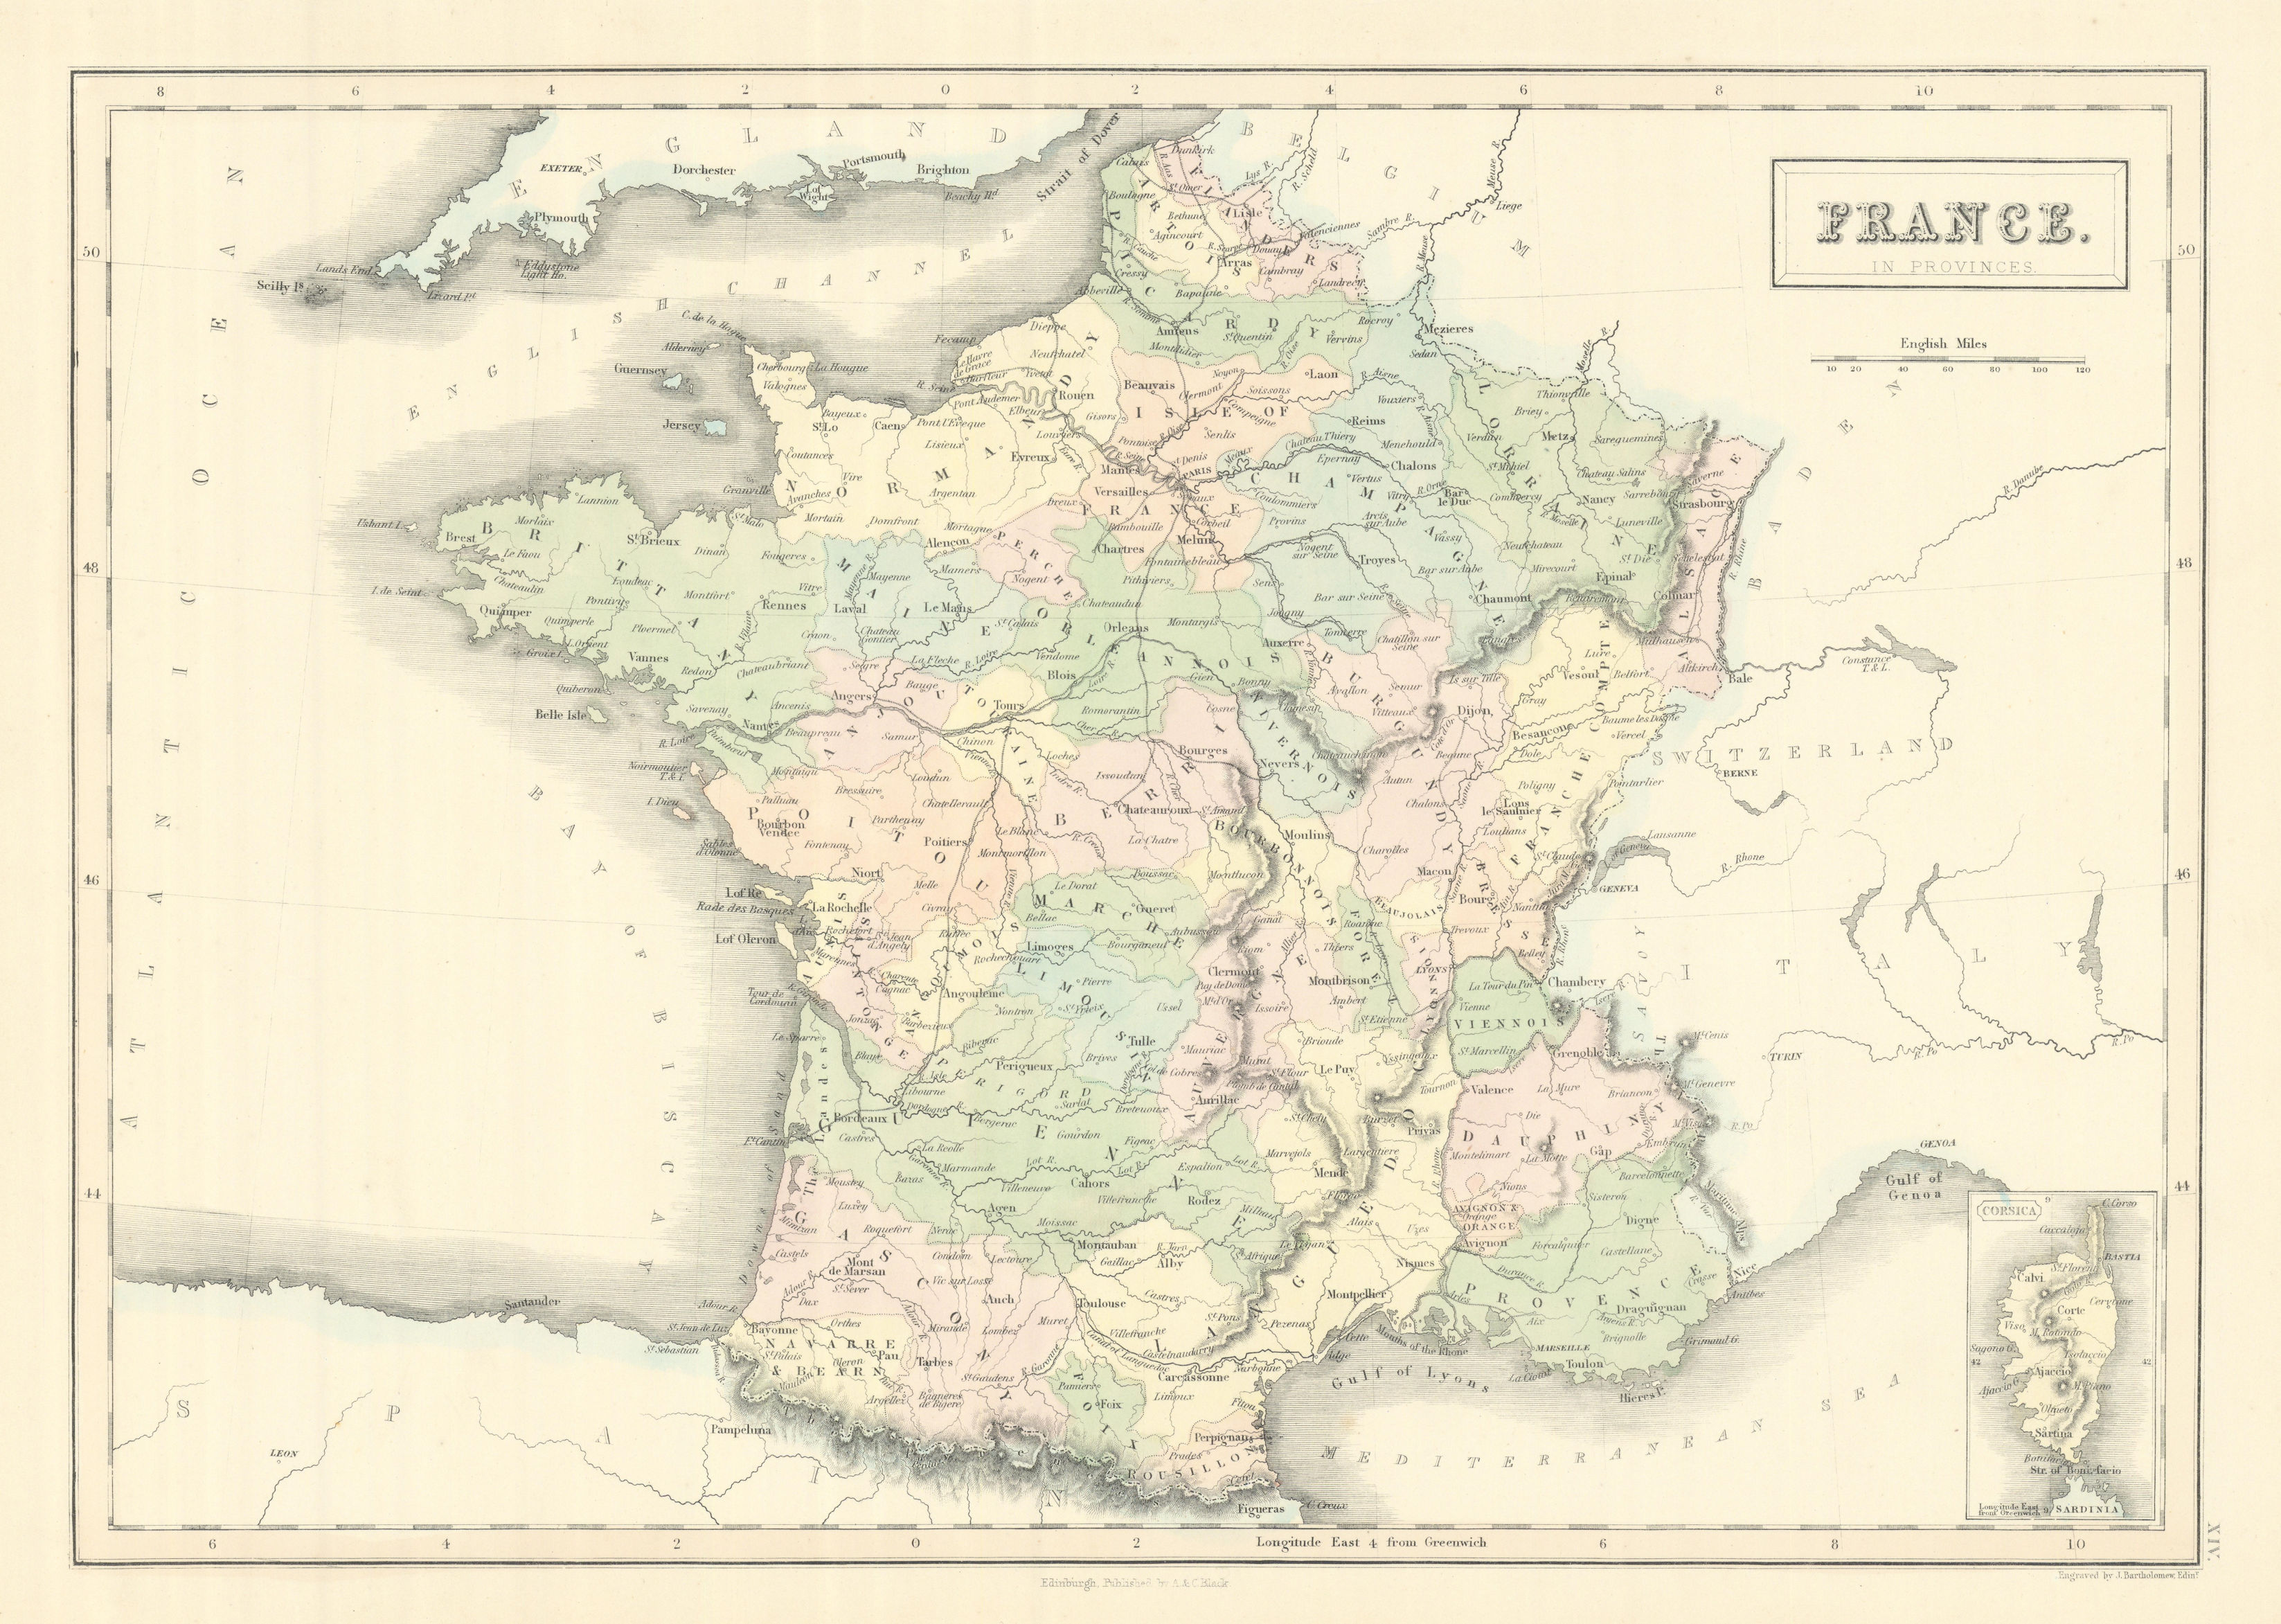 Associate Product France in provinces showing railways. JOHN BARTHOLOMEW 1854 old antique map